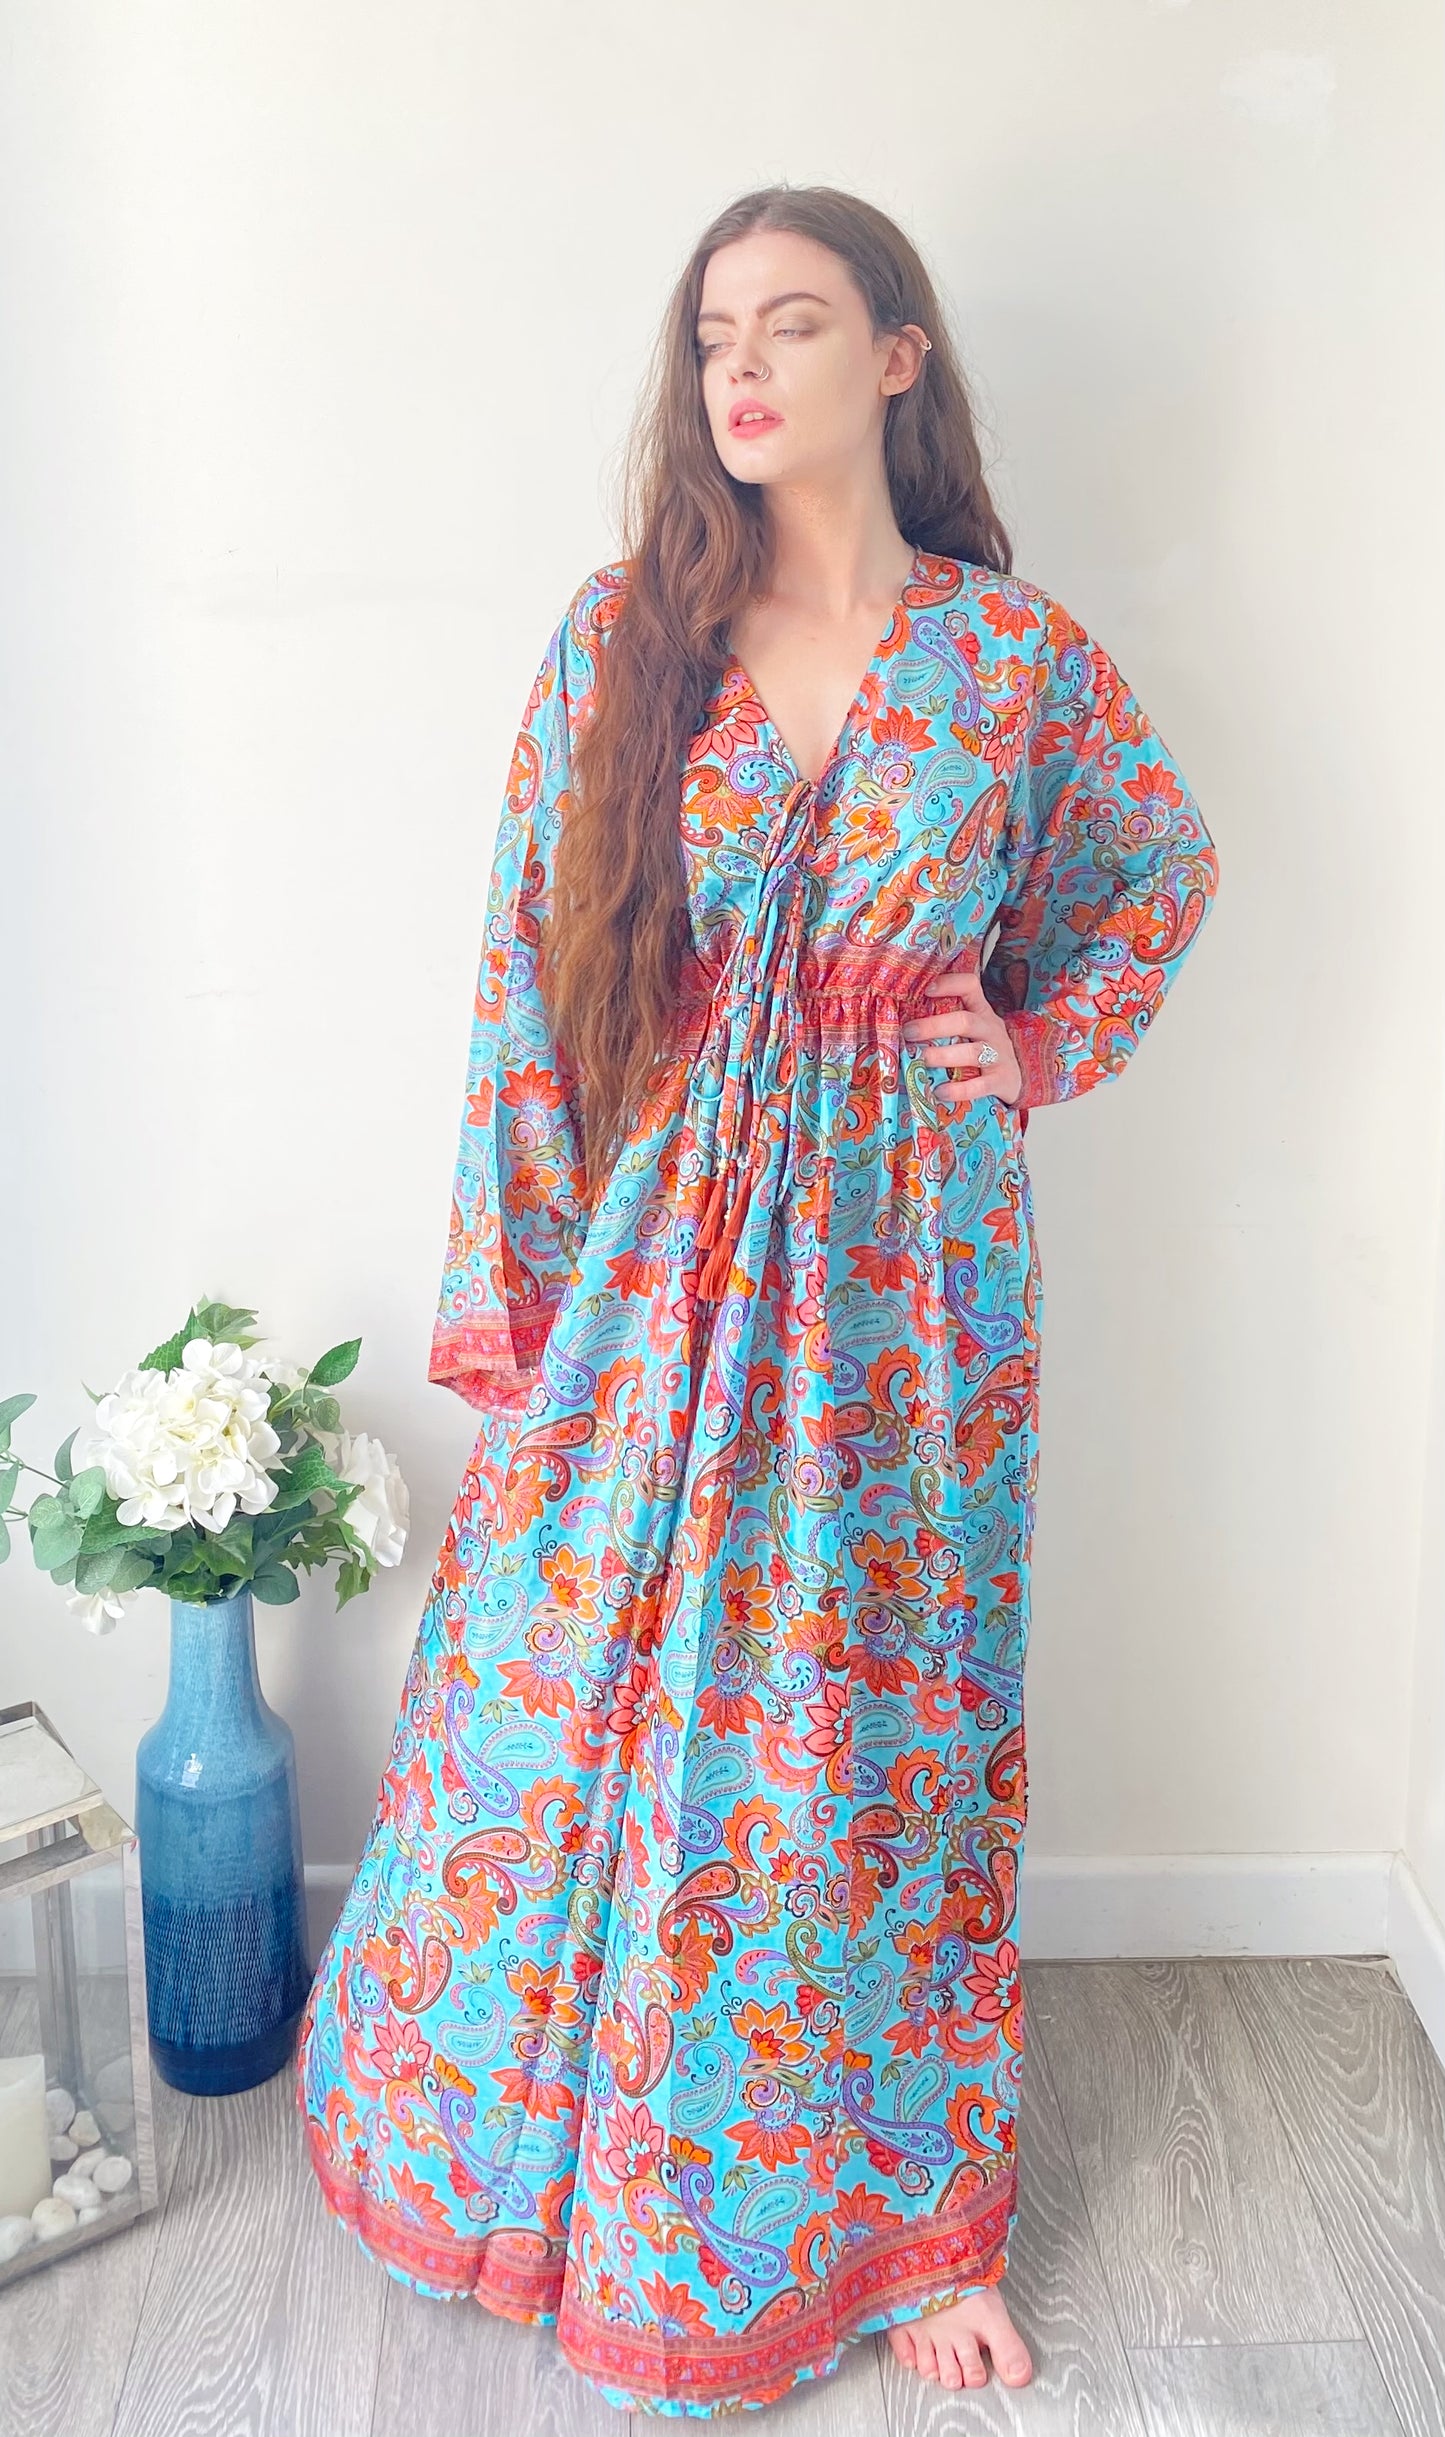 Nova blue red floral print silk maxi dress free size UK8-16DRESSES